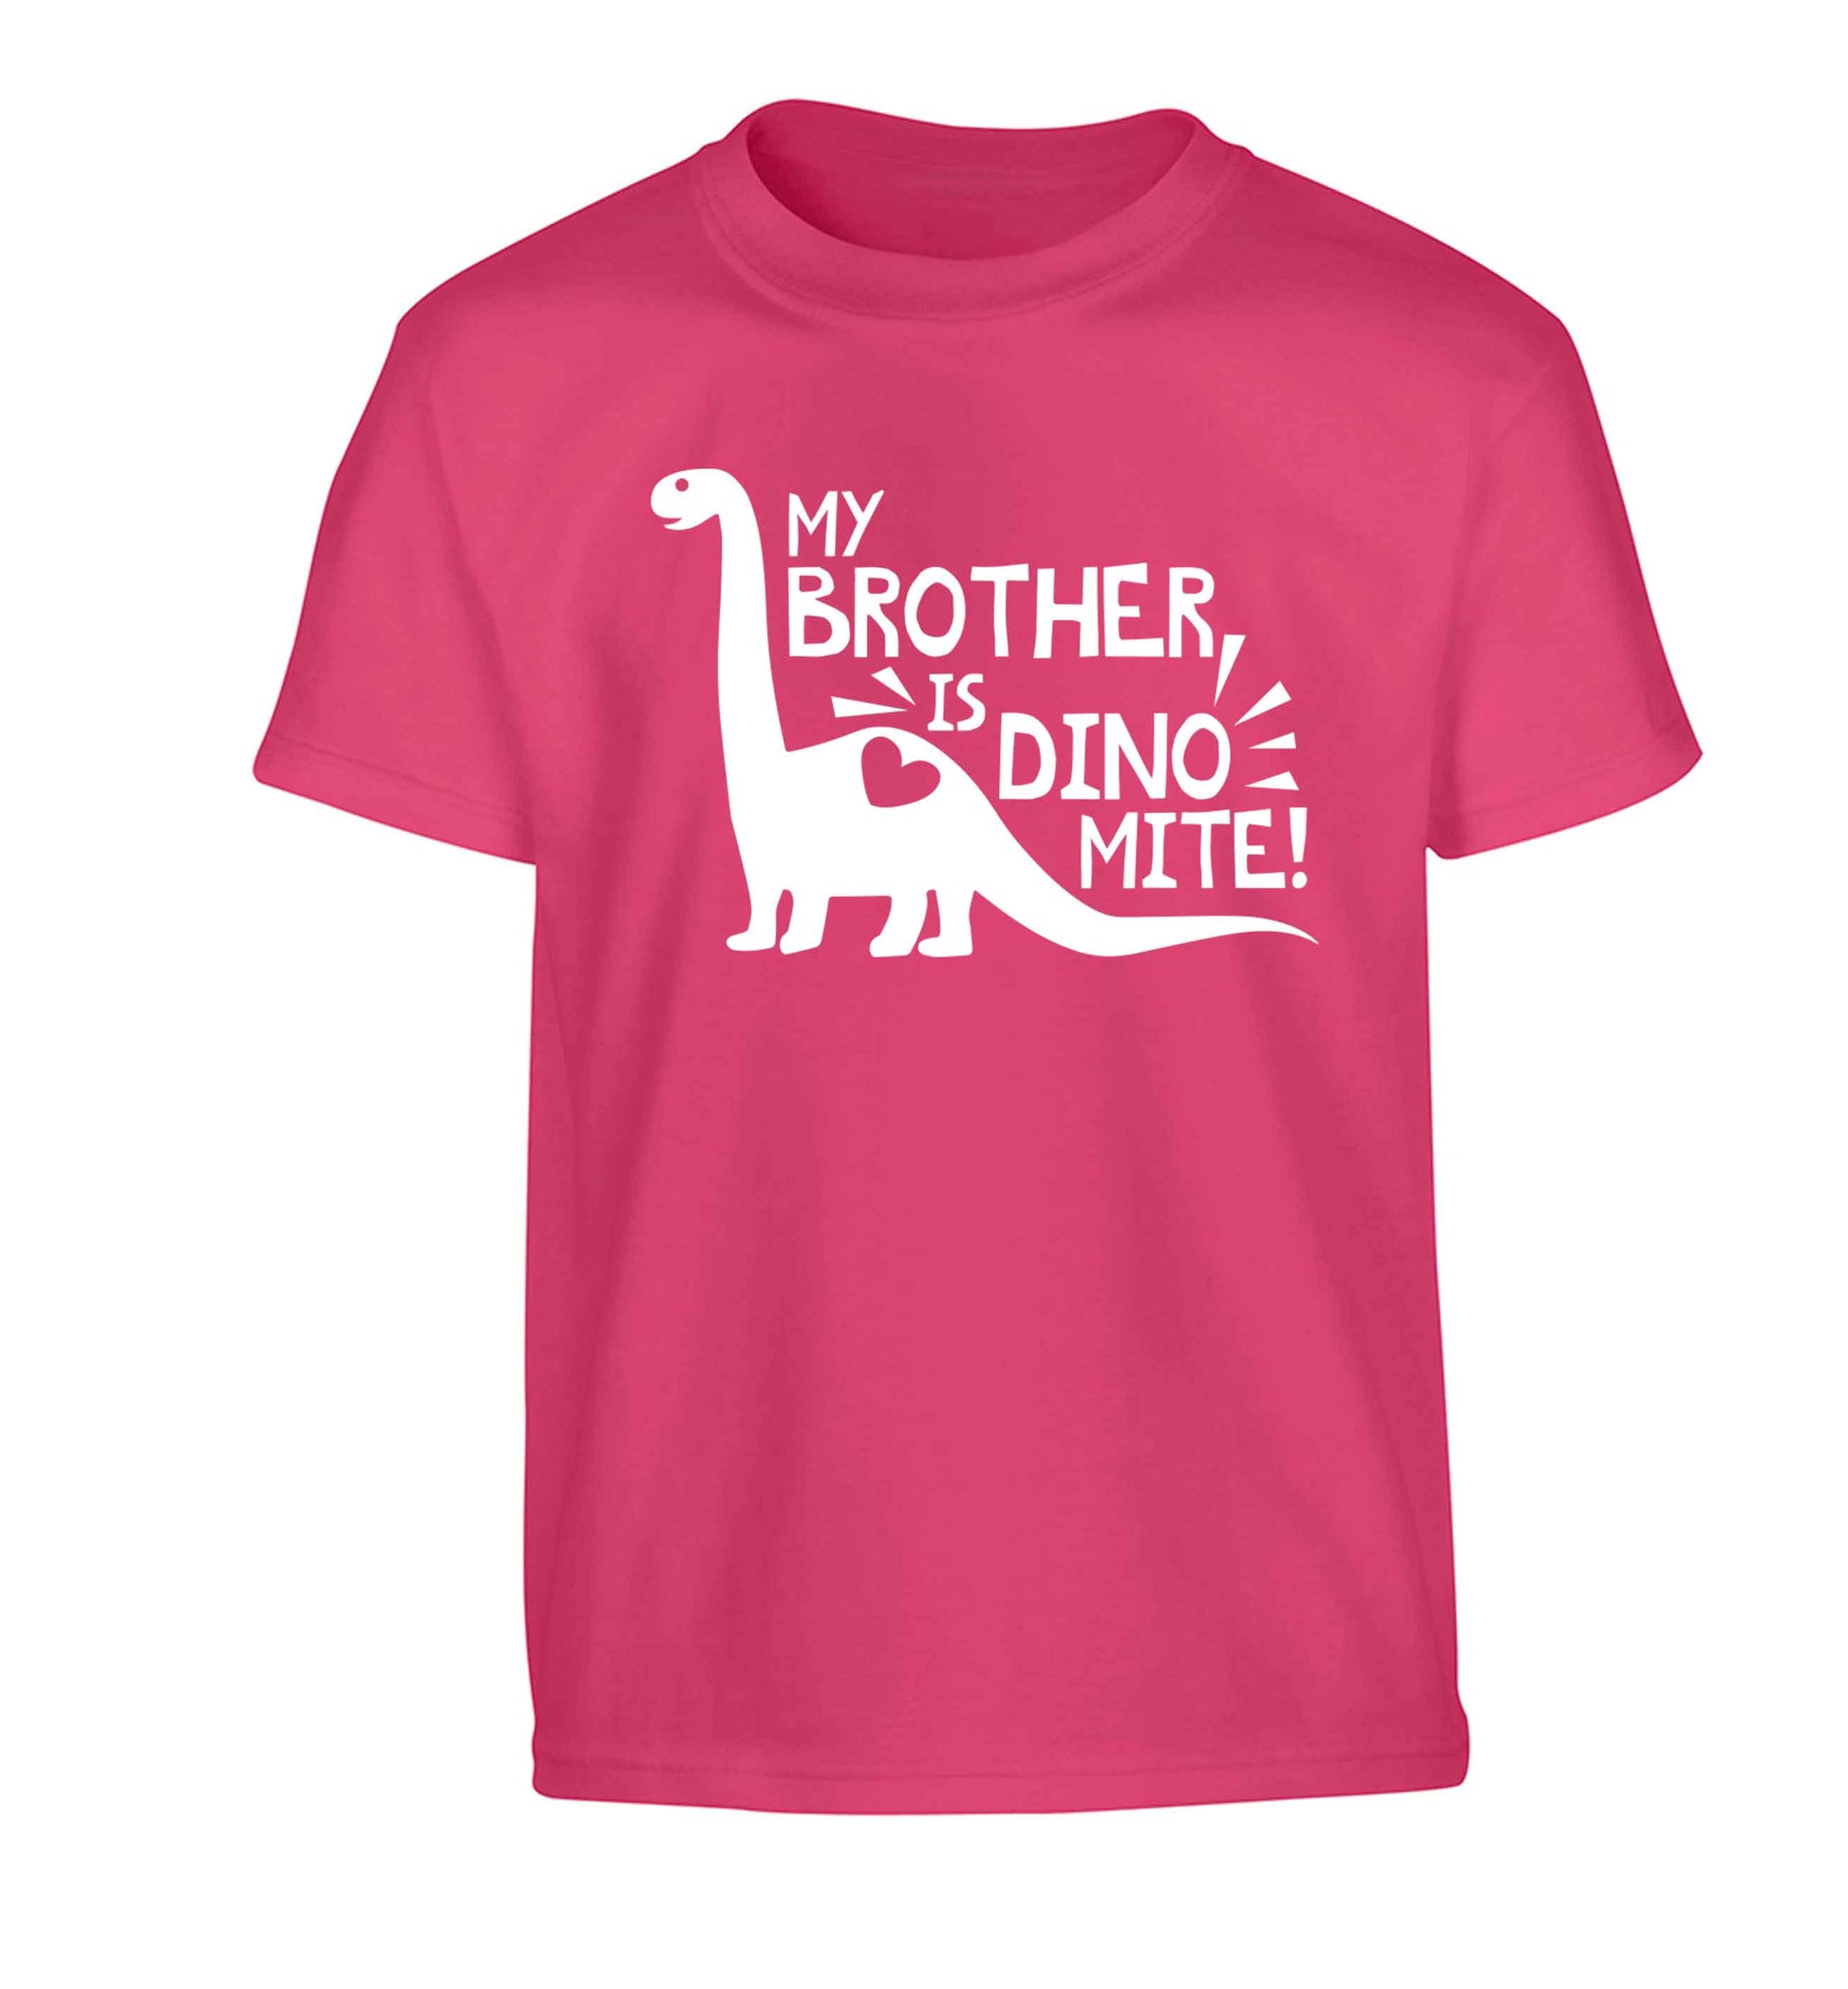 My brother is dinomite! Children's pink Tshirt 12-13 Years